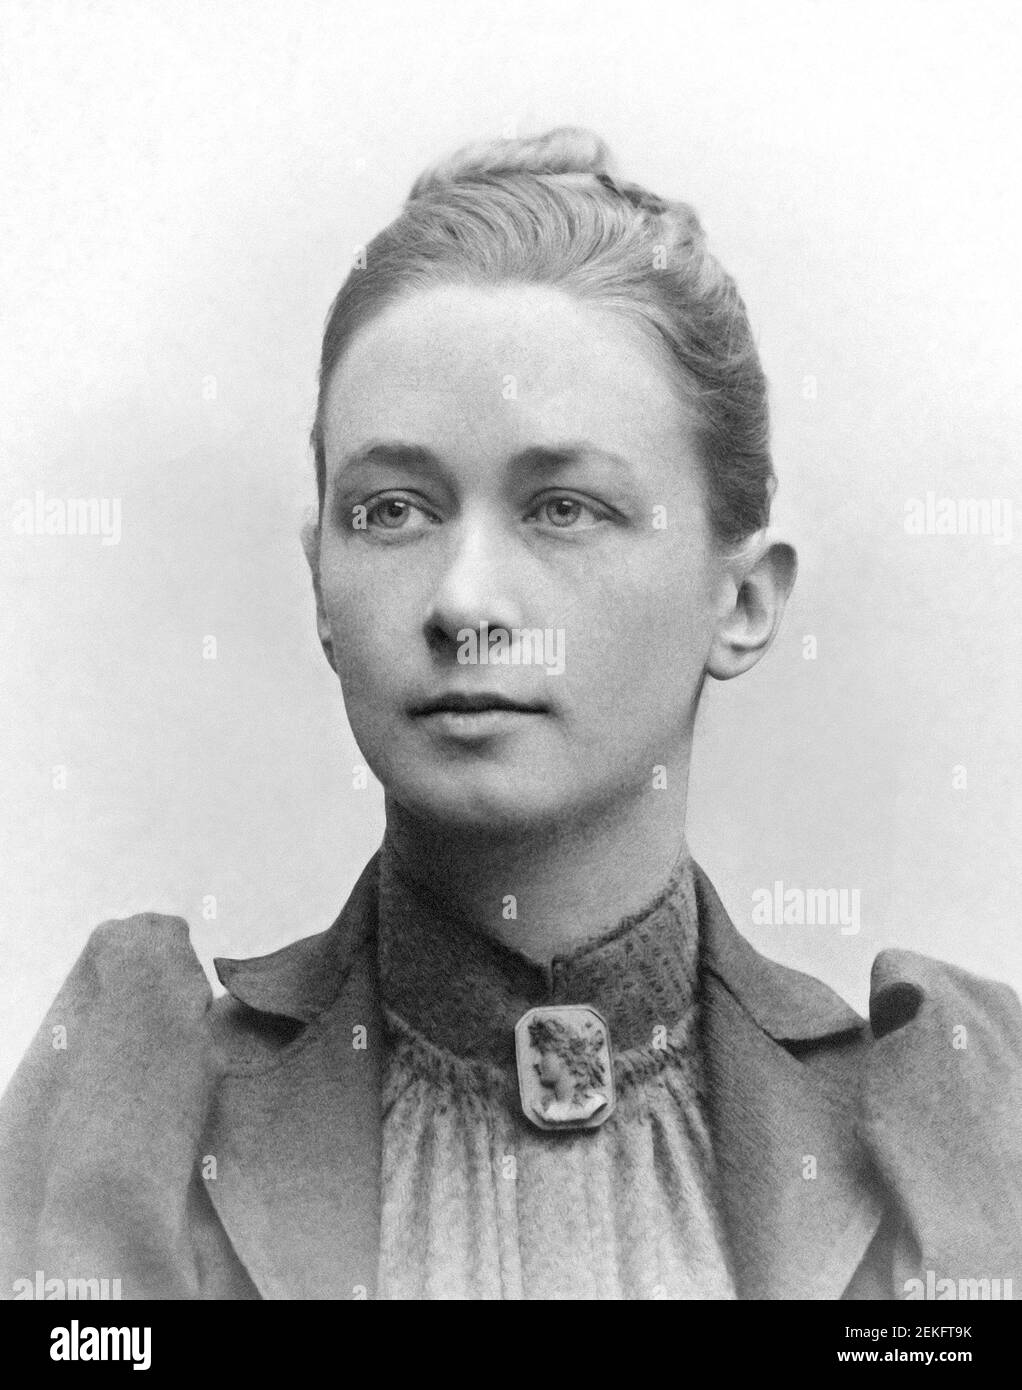 Hilma af Klint. Portrait of the Swedish artist and mystic, Hilma af Klint (1862-1944), c.1901 Stock Photo